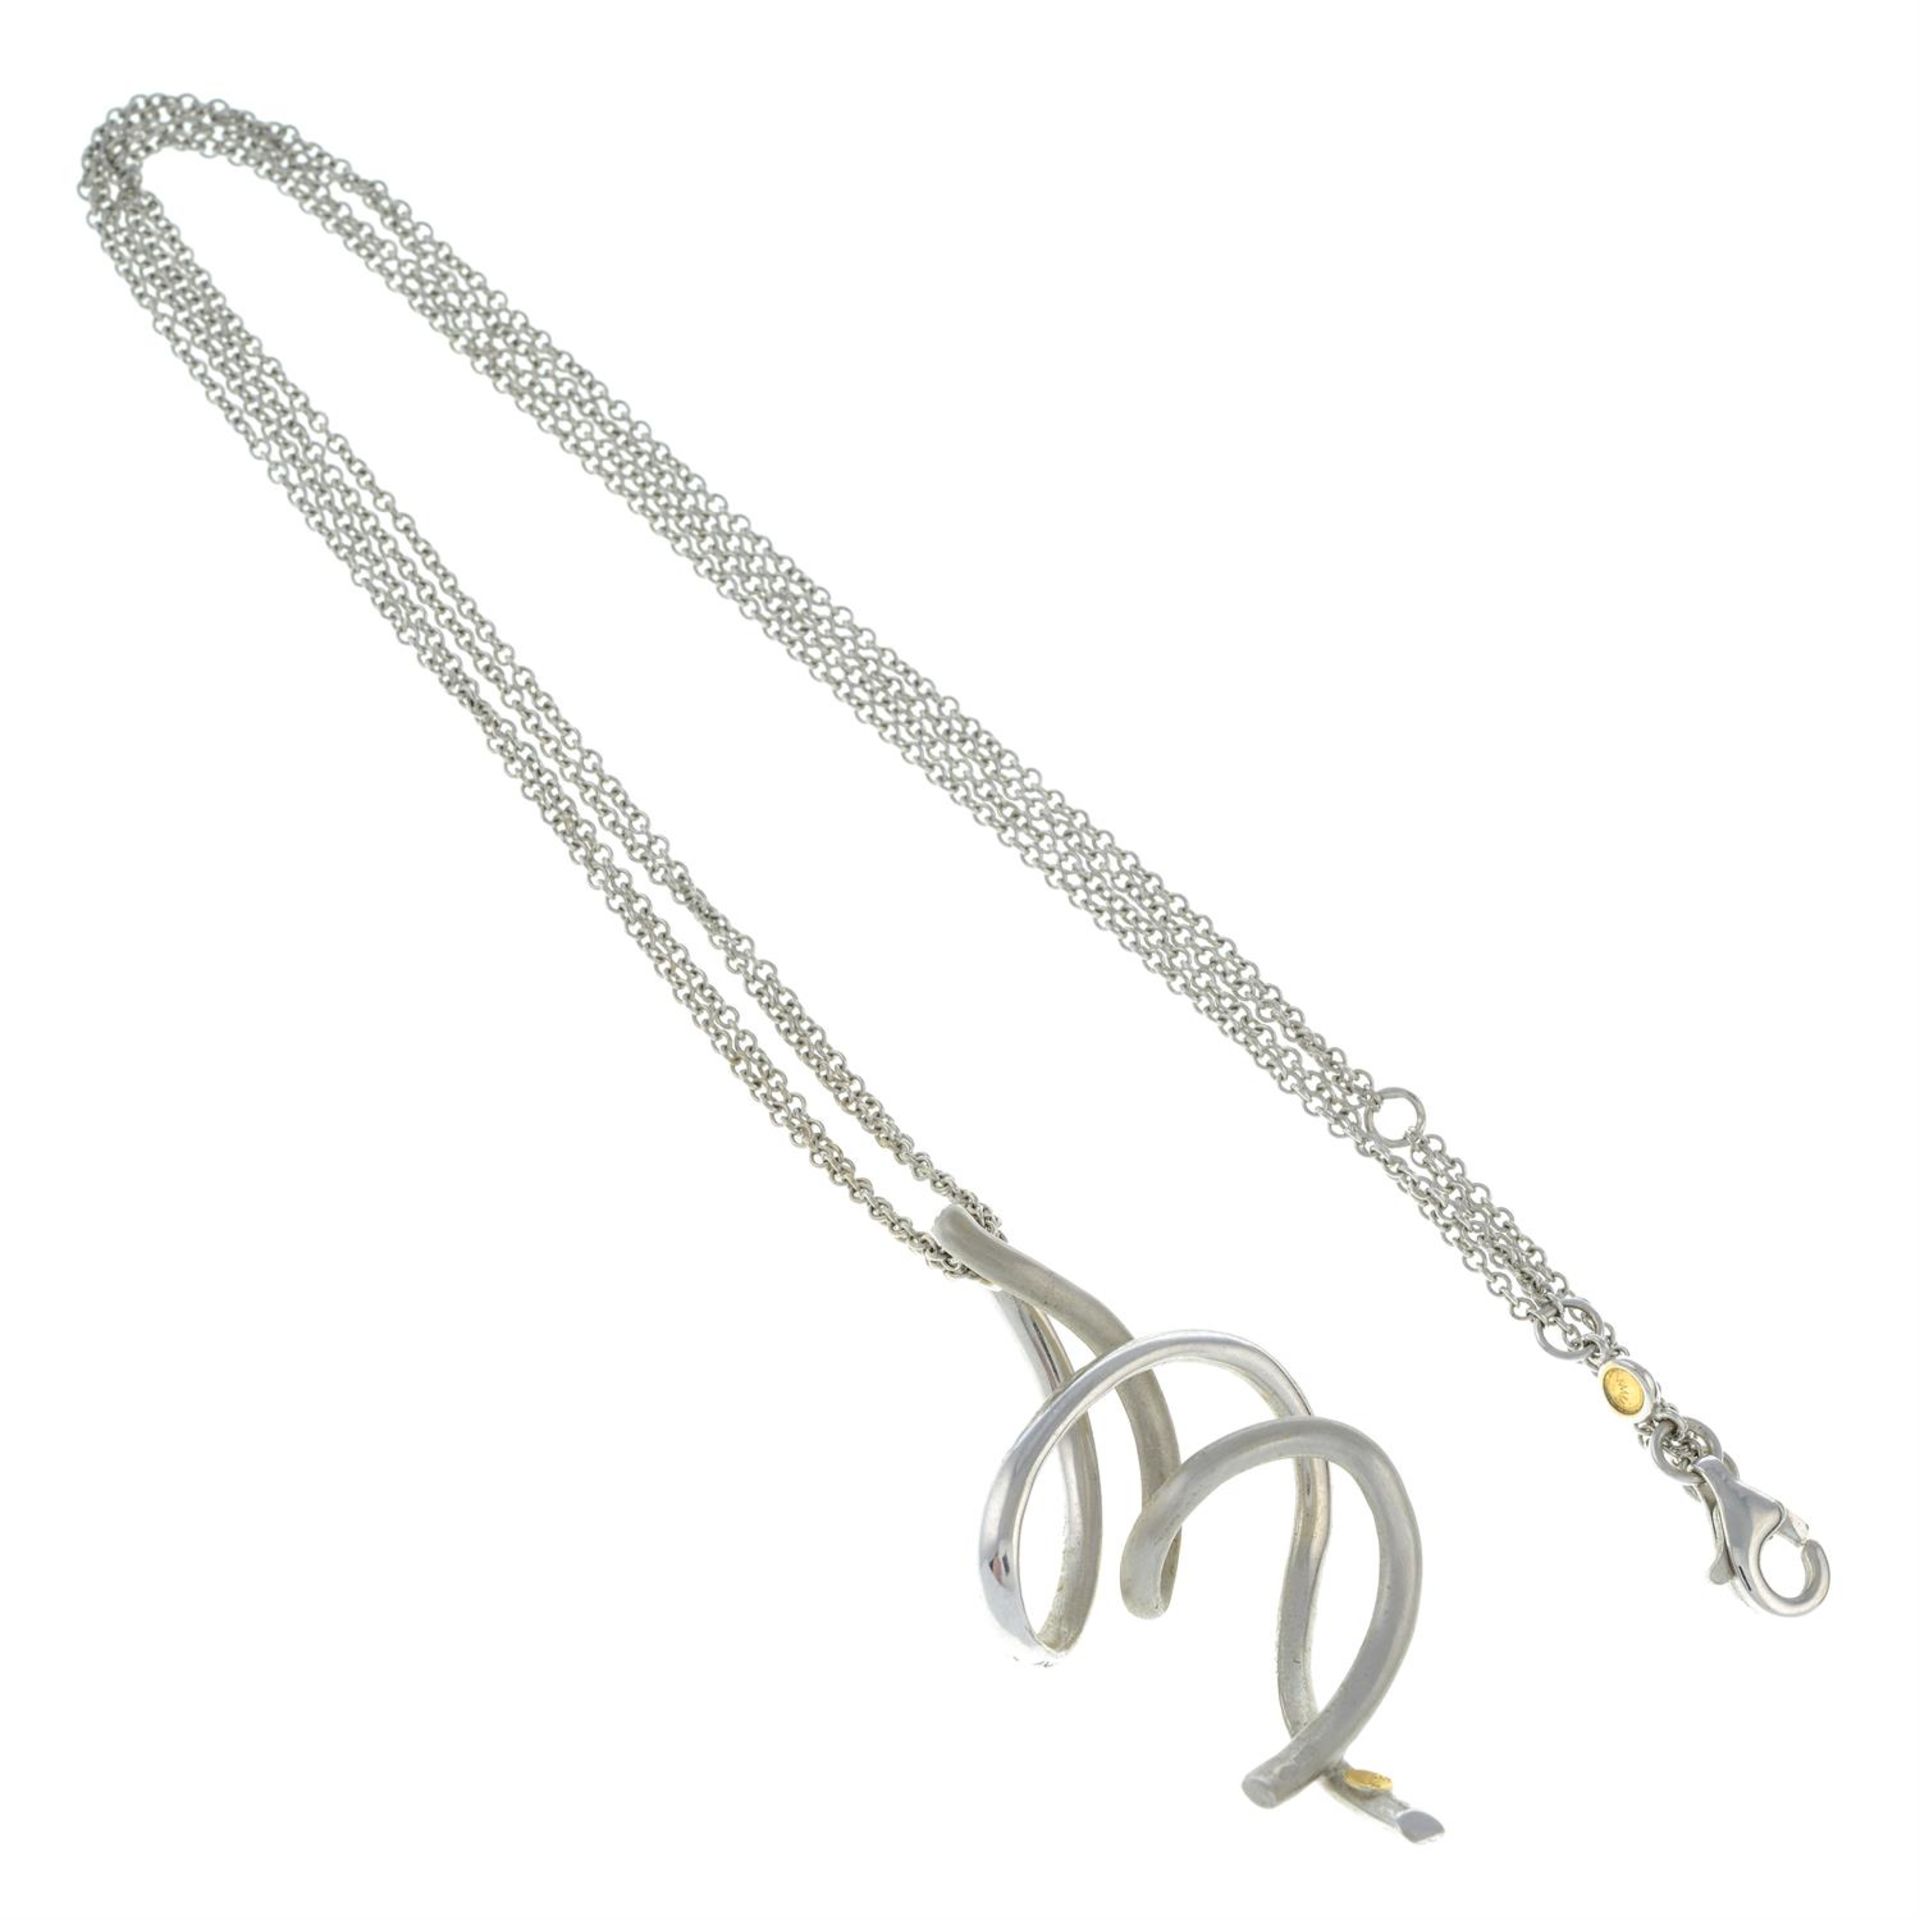 A brilliant-cut diamond swirl pendant, with chain. - Image 2 of 2